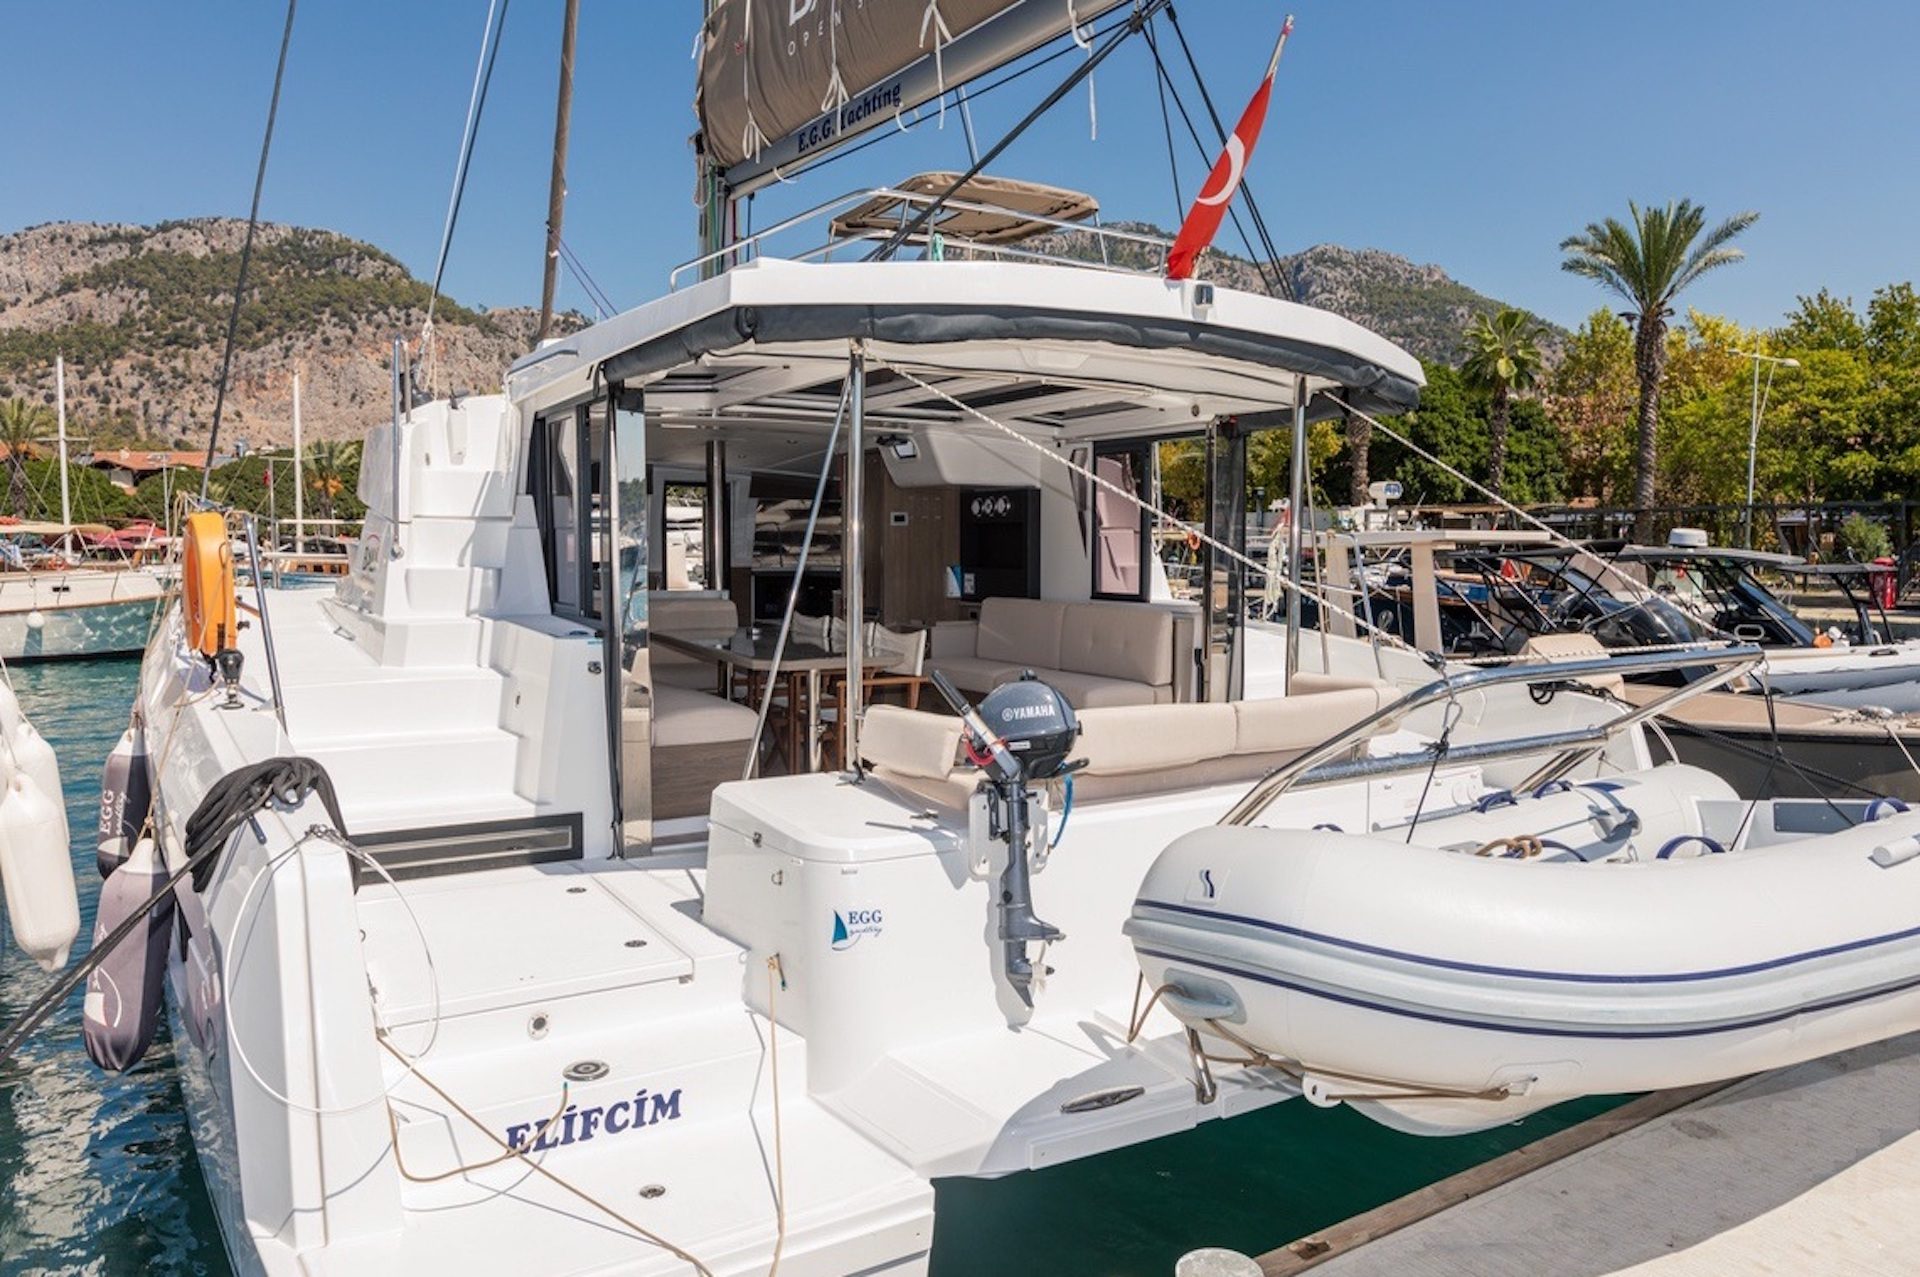 yacht charter Elifcim catamaran